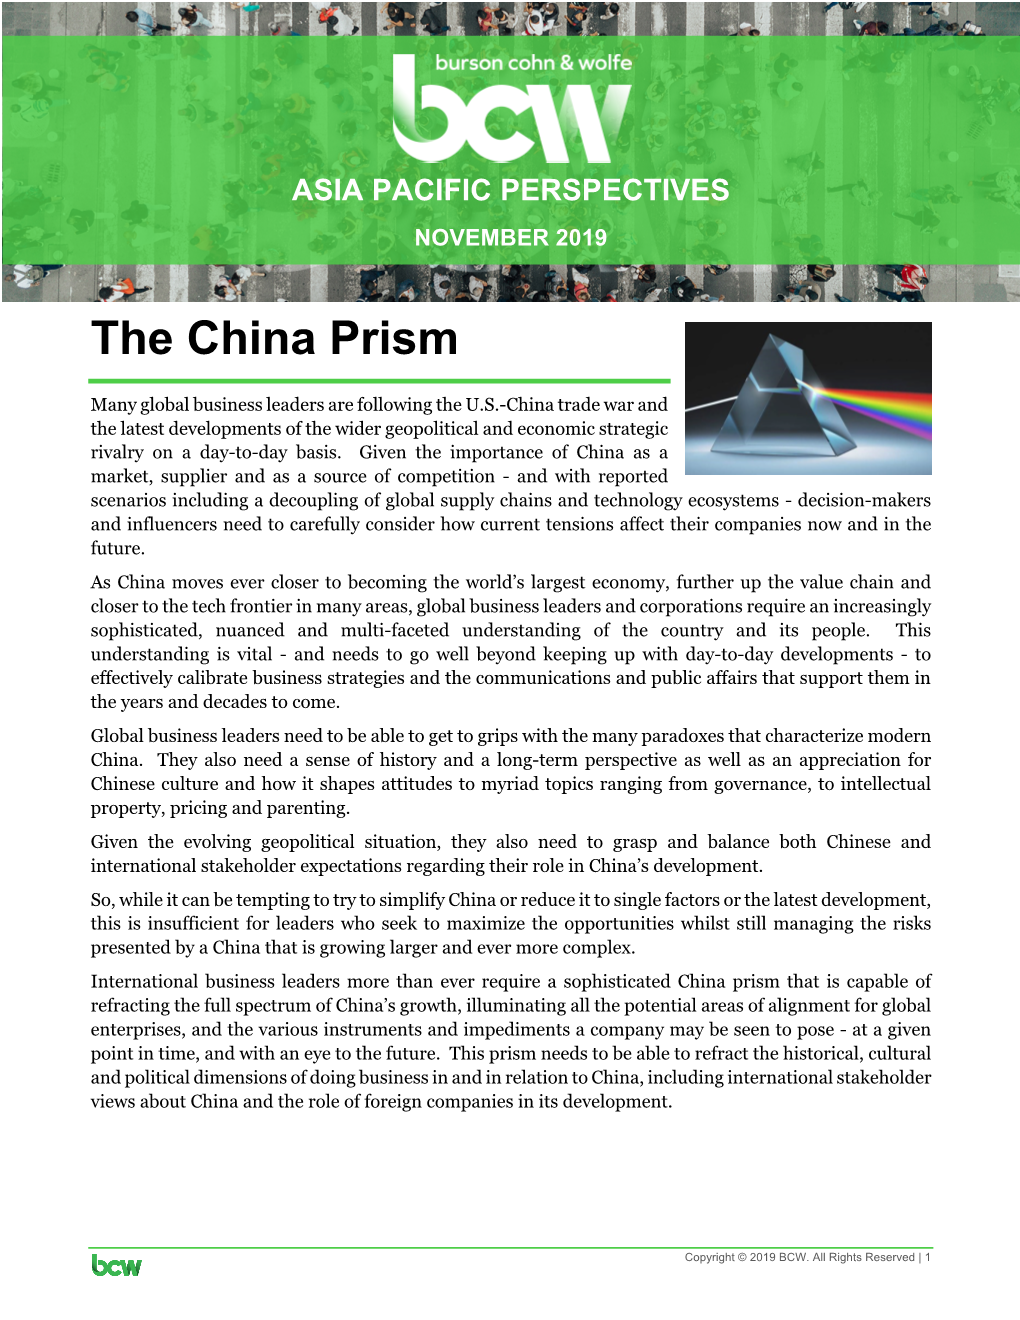 The China Prism – November 2019